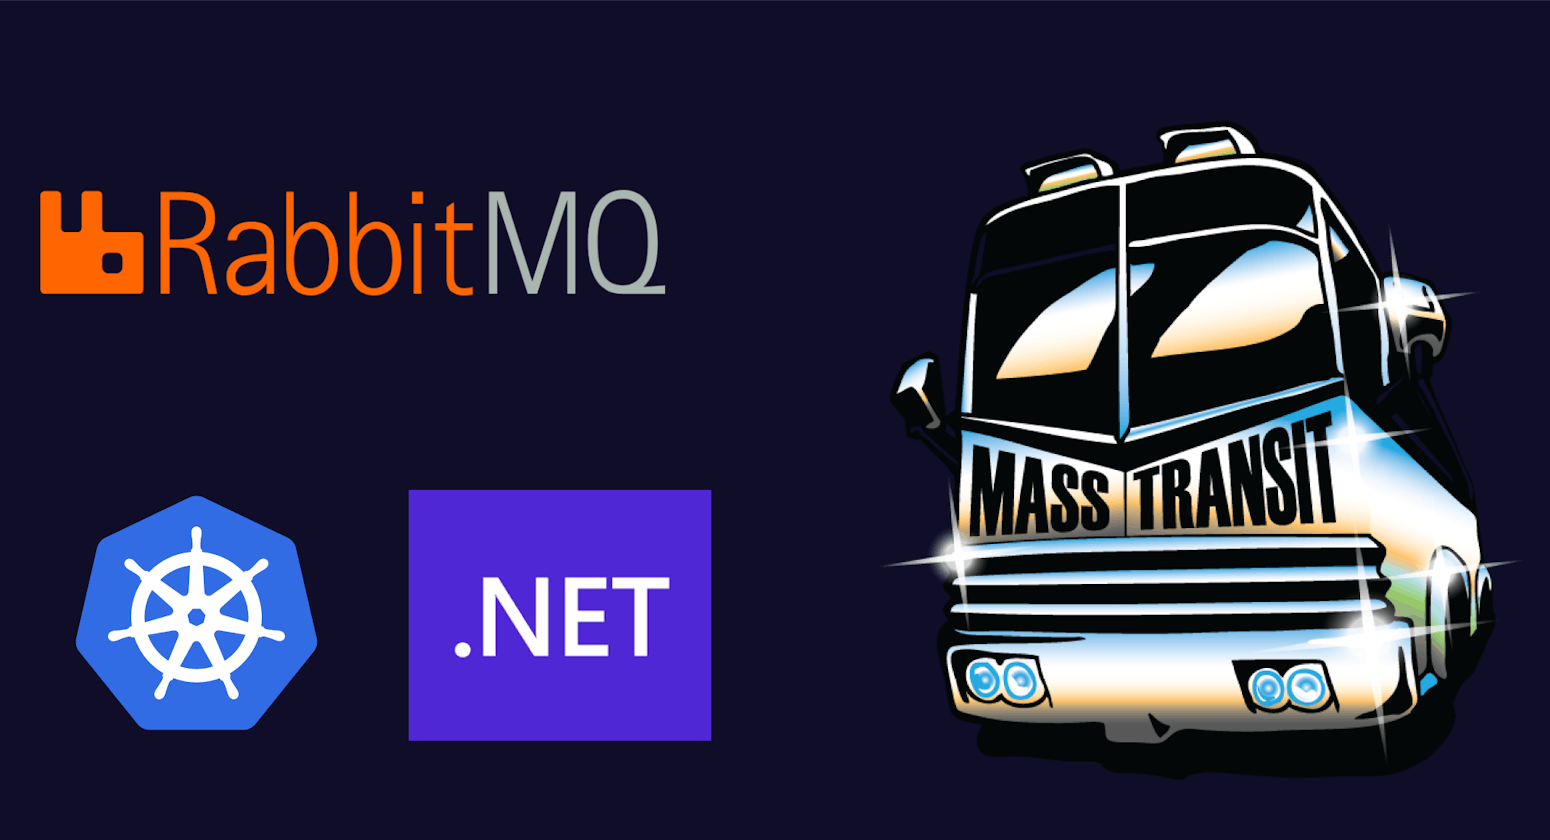 RabbitMQ + .NET + Mass Transit